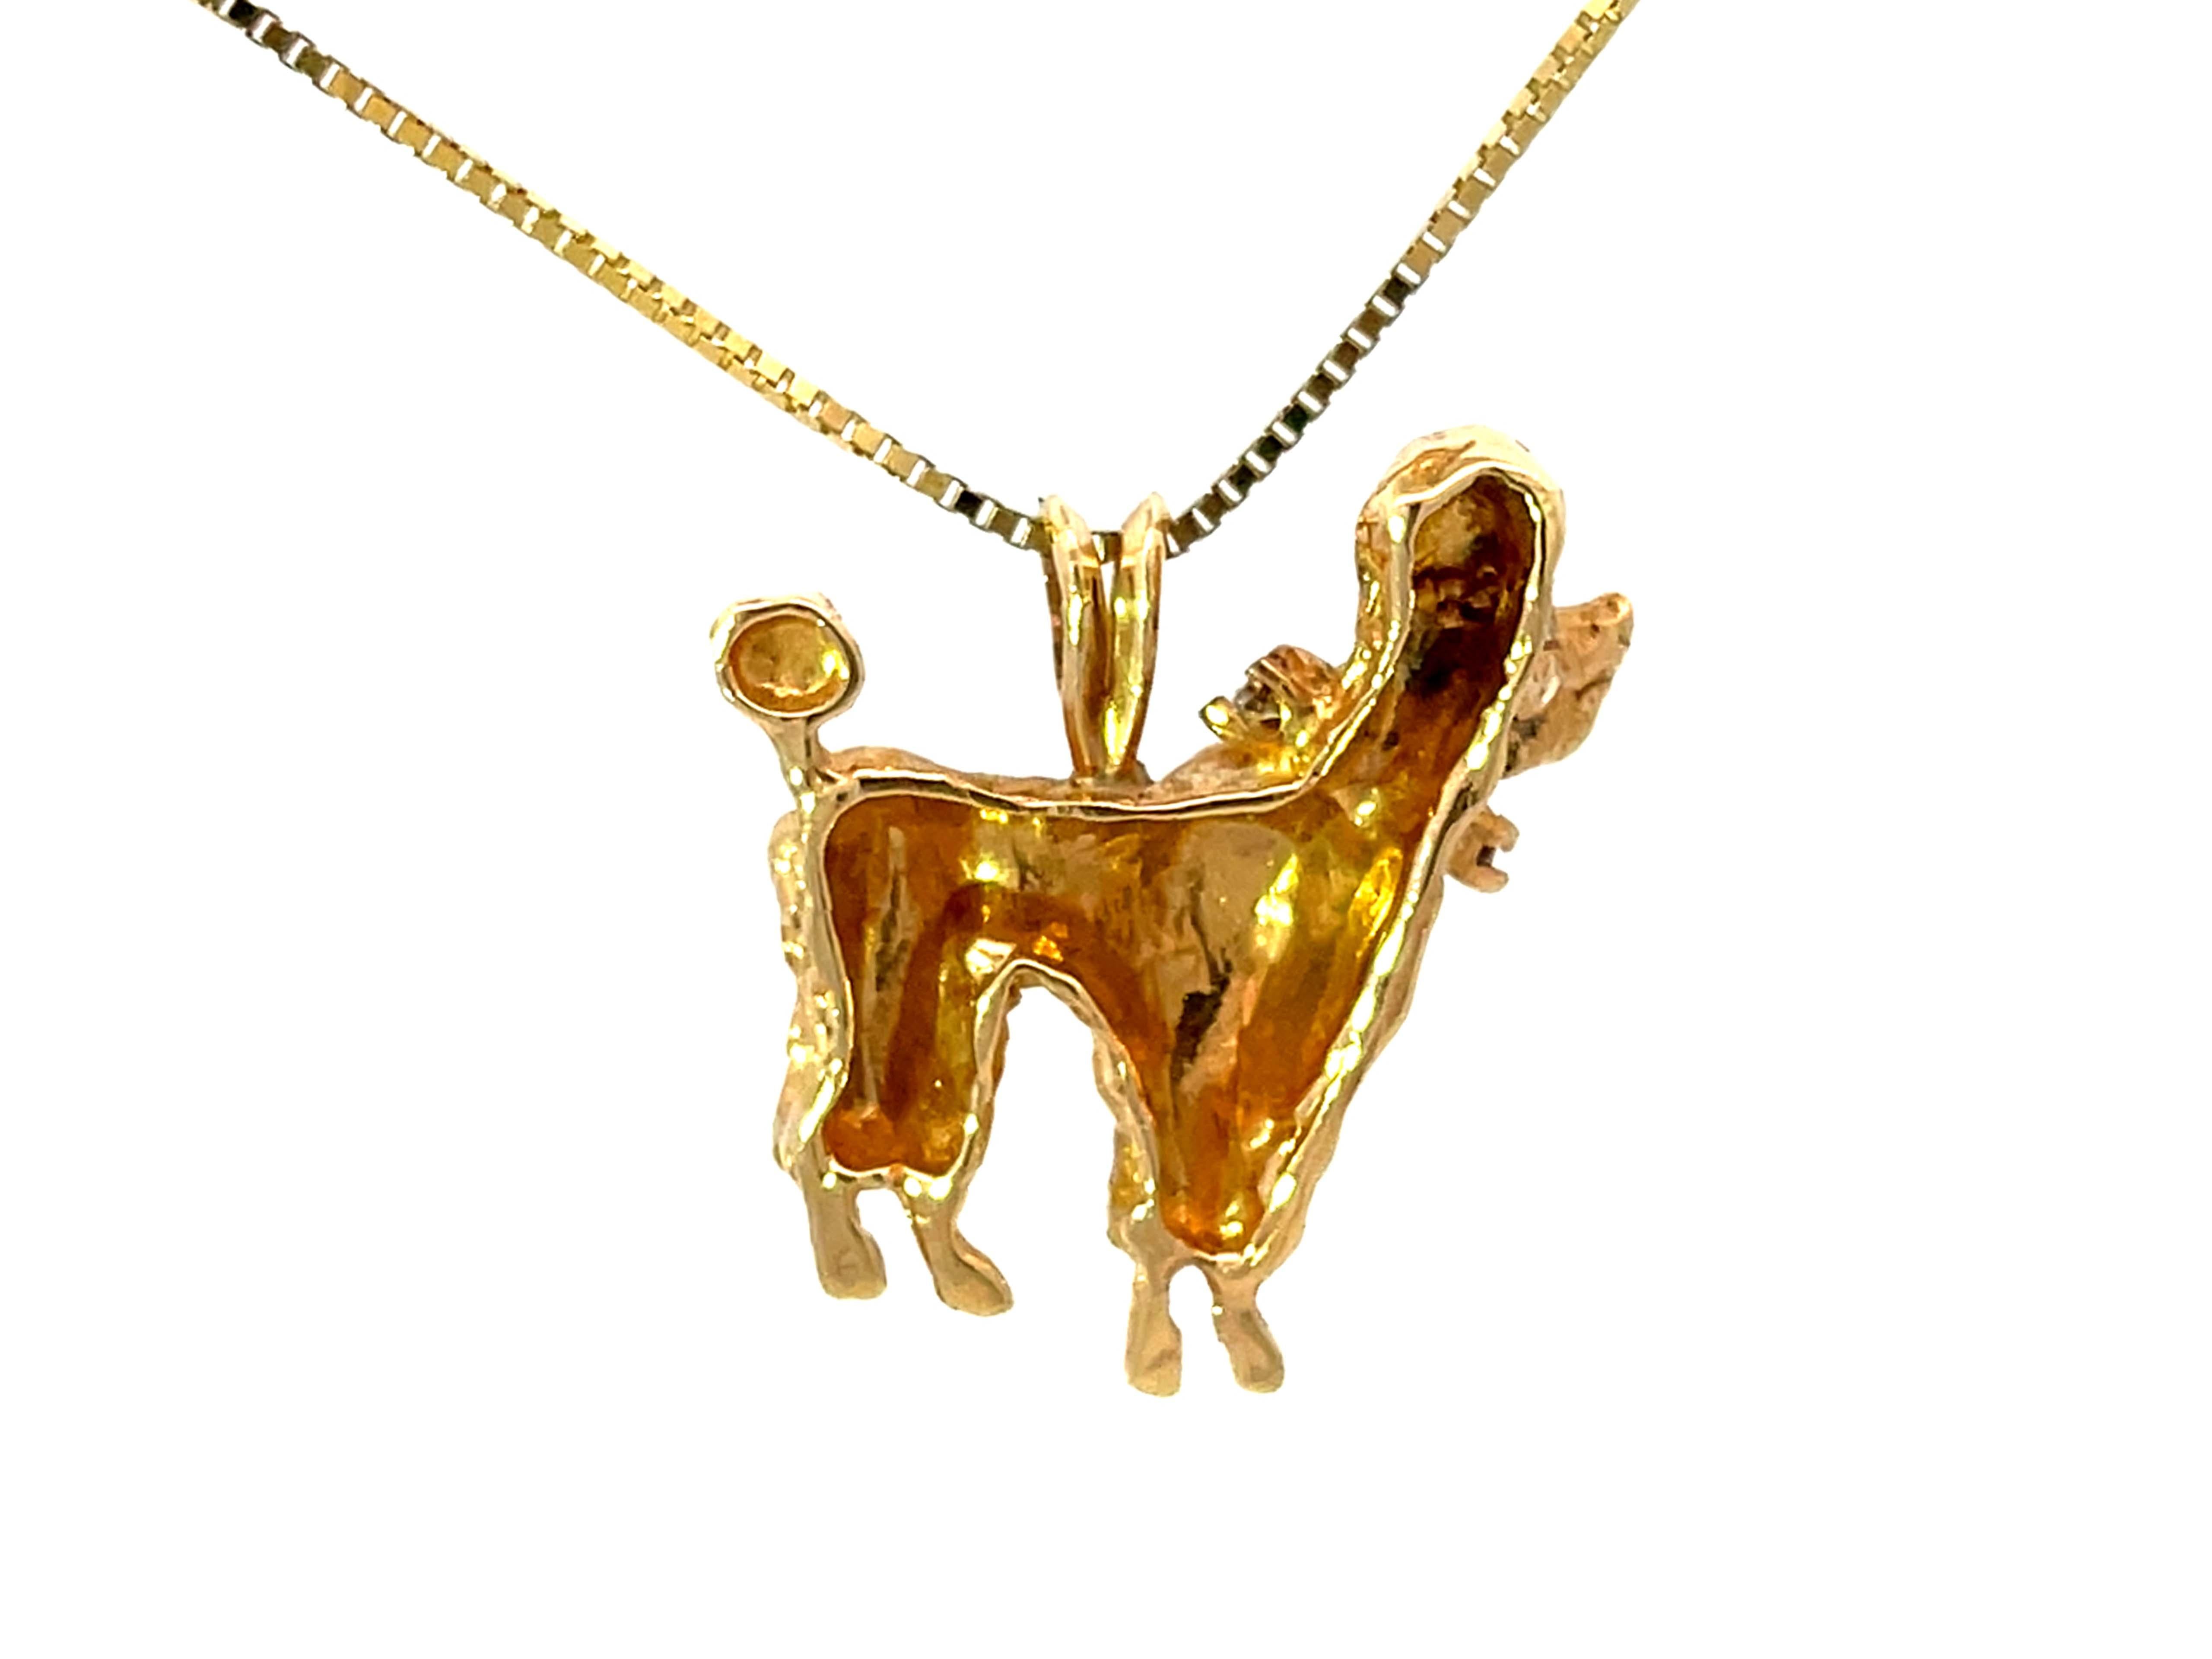 Brilliant Cut 14K Solid Gold Poodle Diamond Dog Necklace For Sale